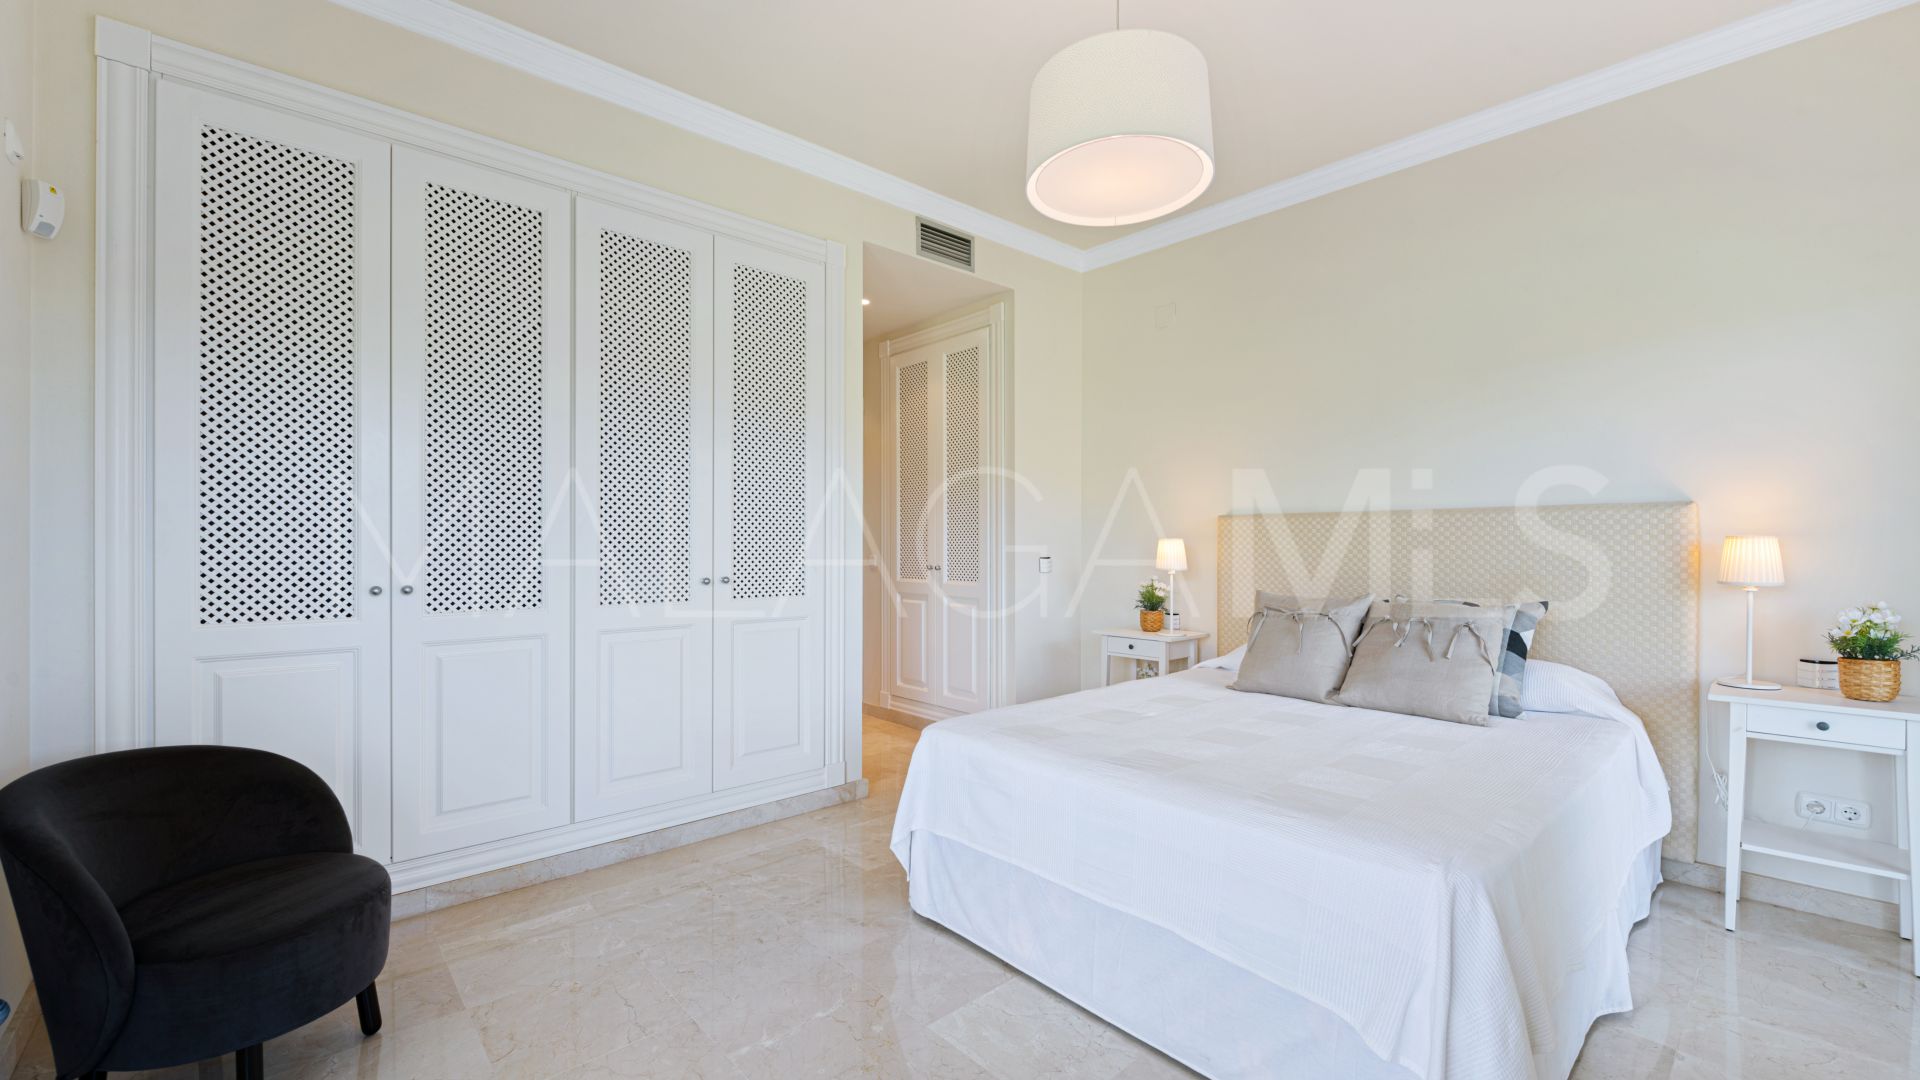 For sale villa with 5 bedrooms in Carretera de Istan